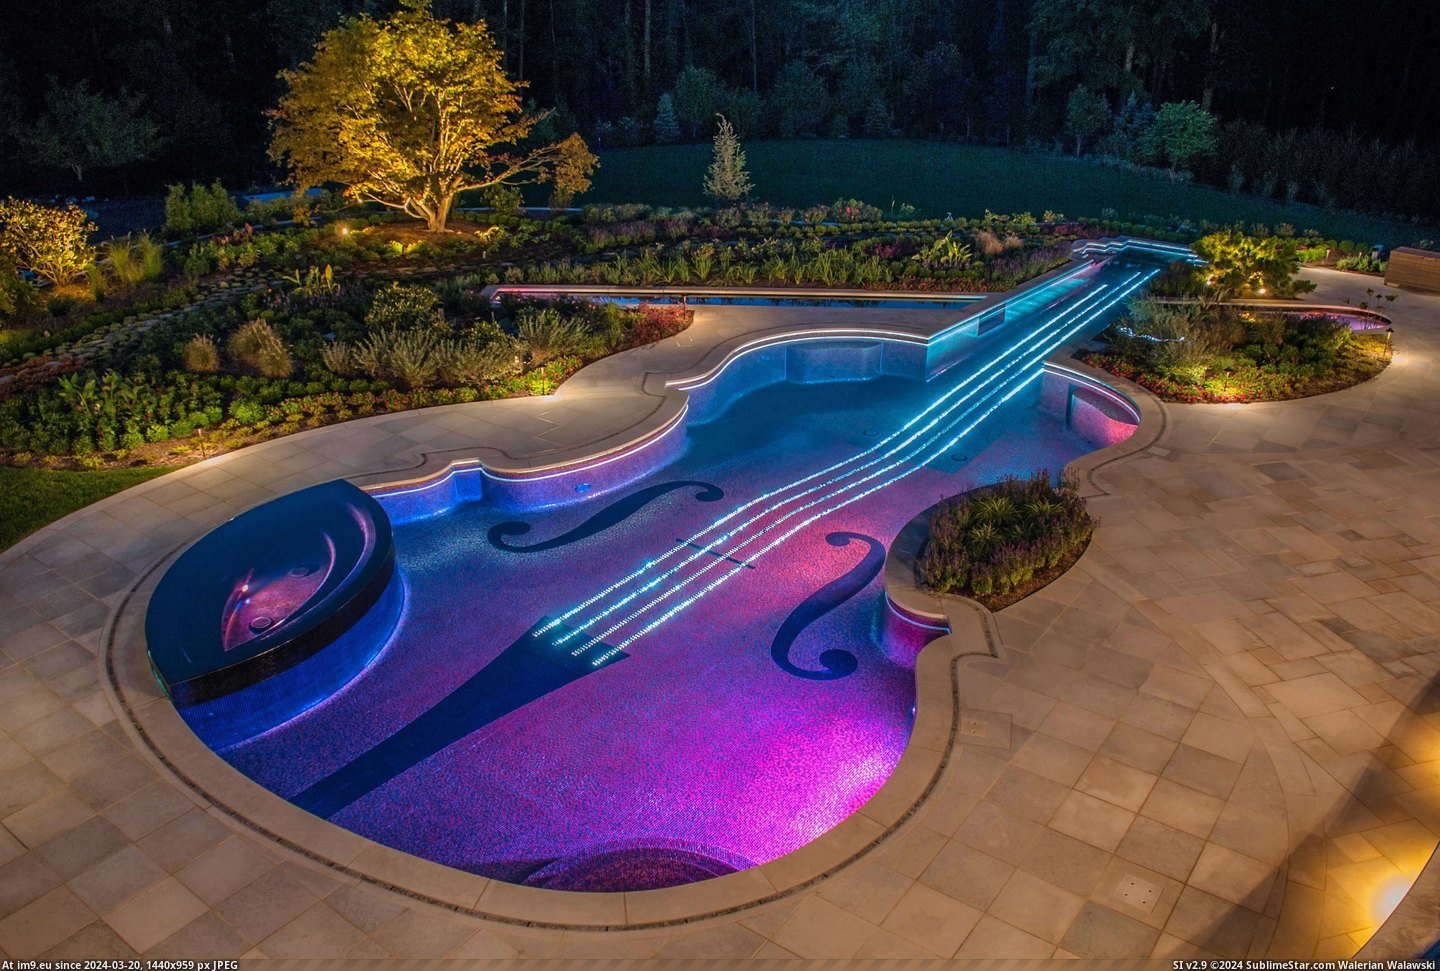 #Pool #Cooler #Violin #Sounds [Pics] Violin pool; it's cooler than it sounds. Pic. (Image of album My r/PICS favs))